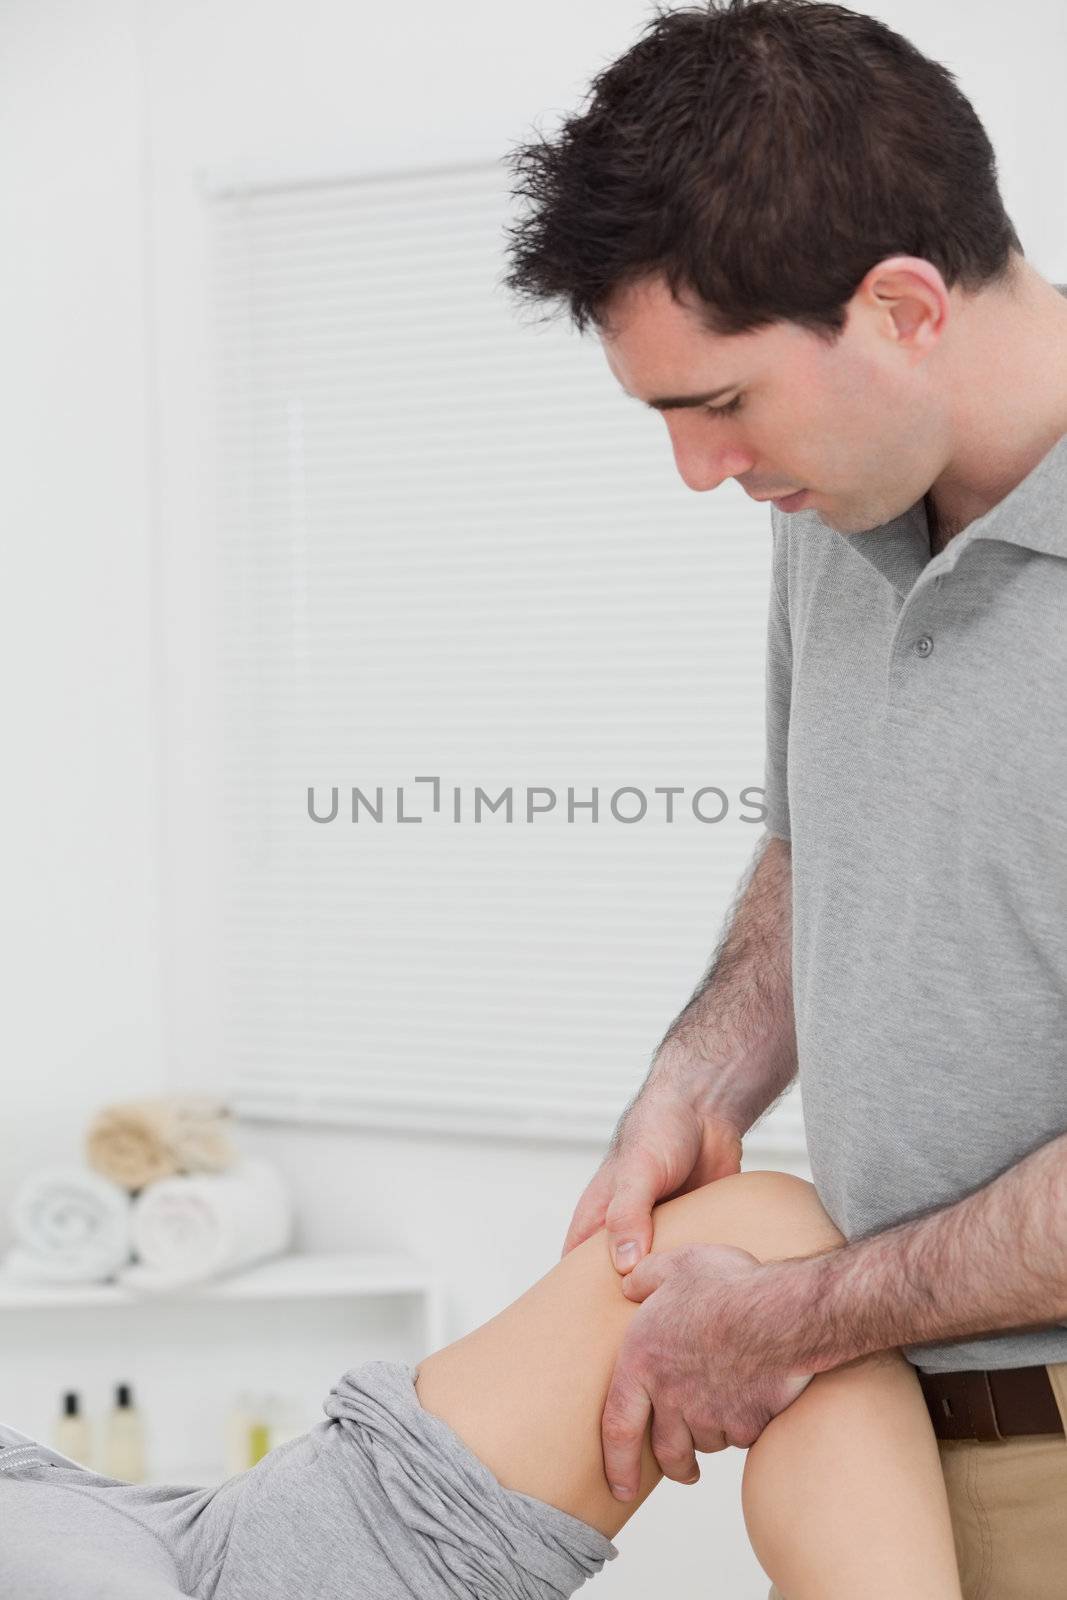 Chiropractor massaging a knee by Wavebreakmedia